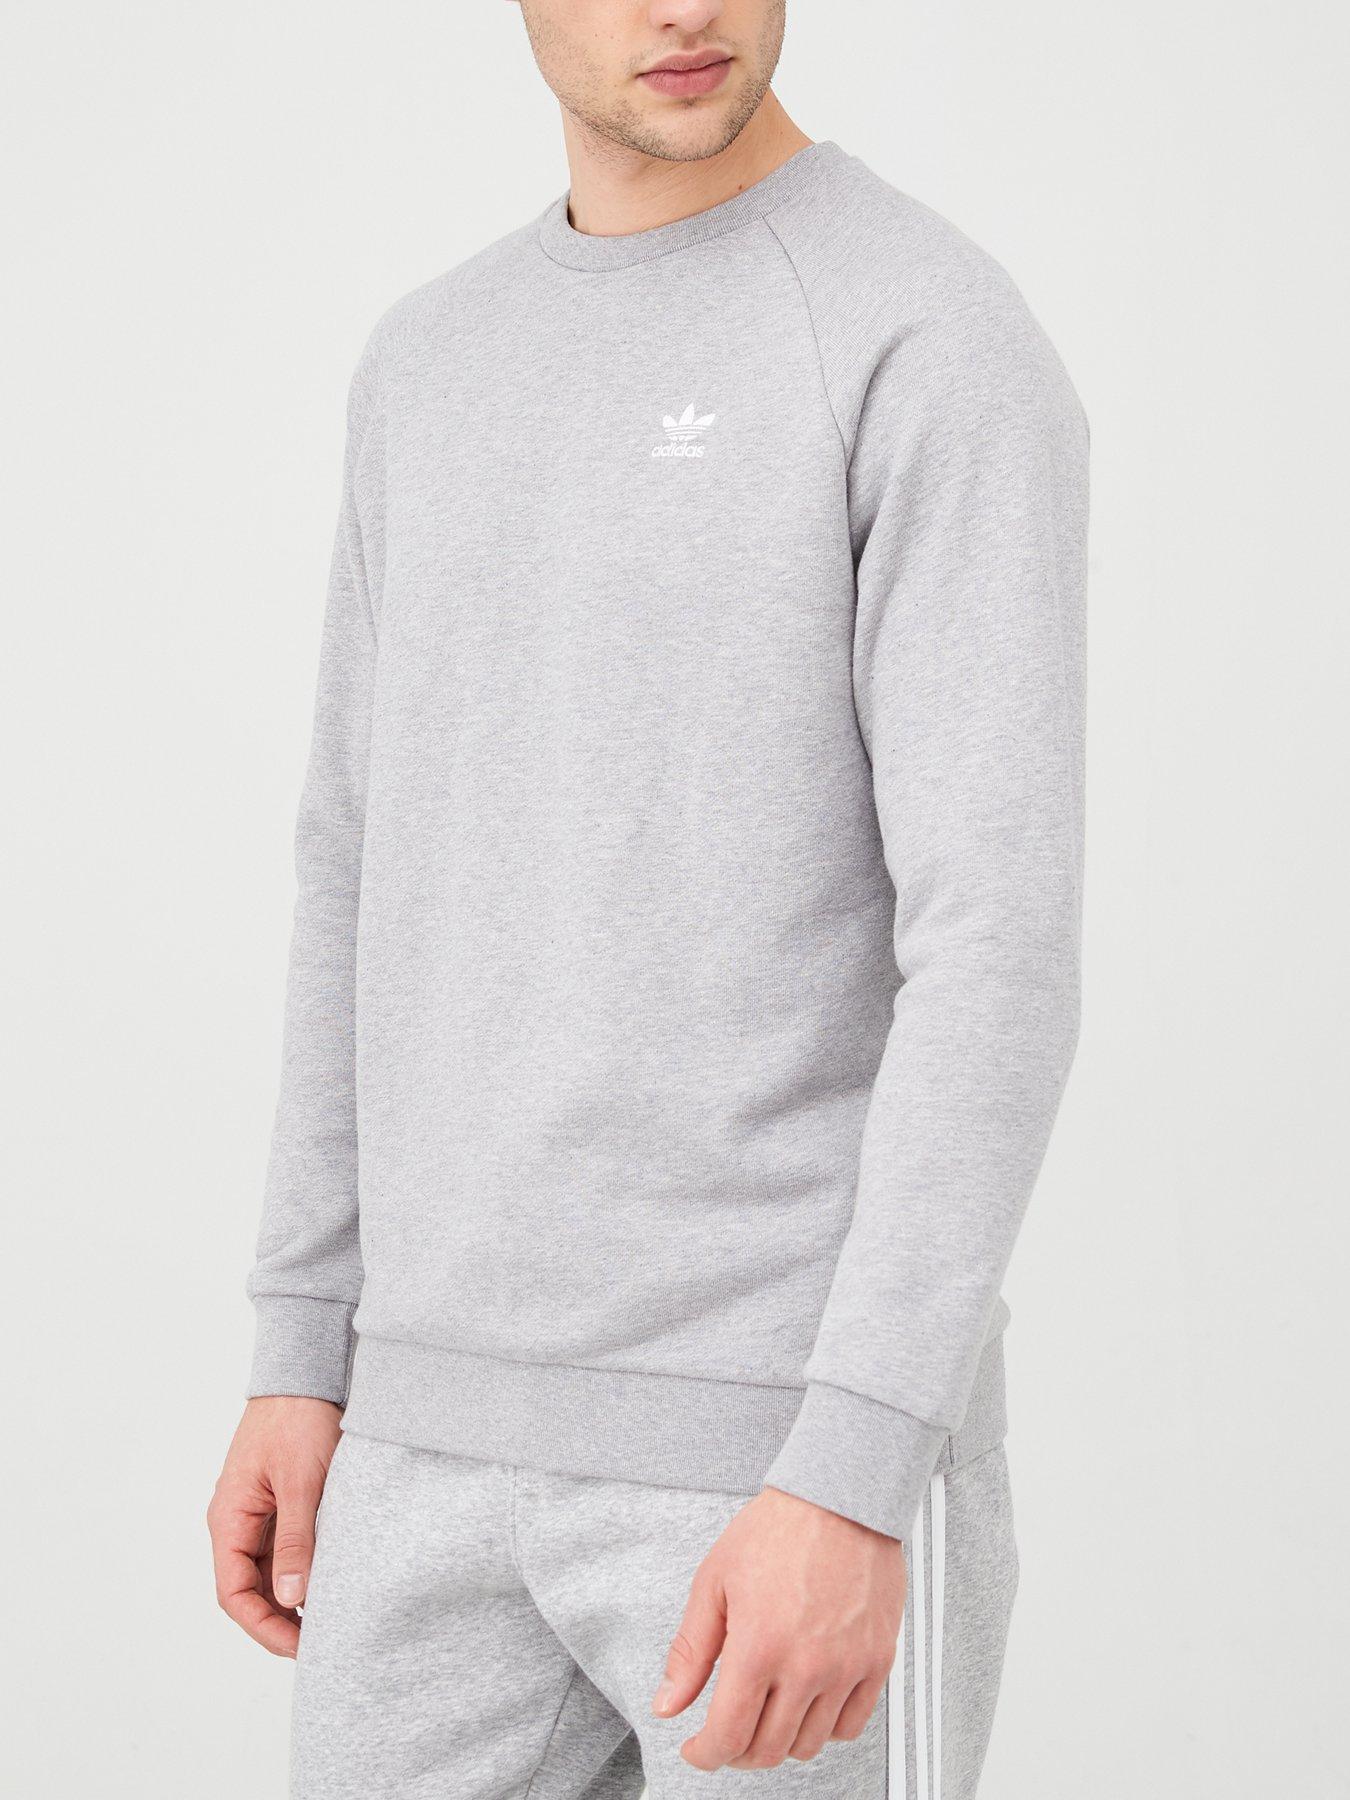 grey and white adidas sweatshirt